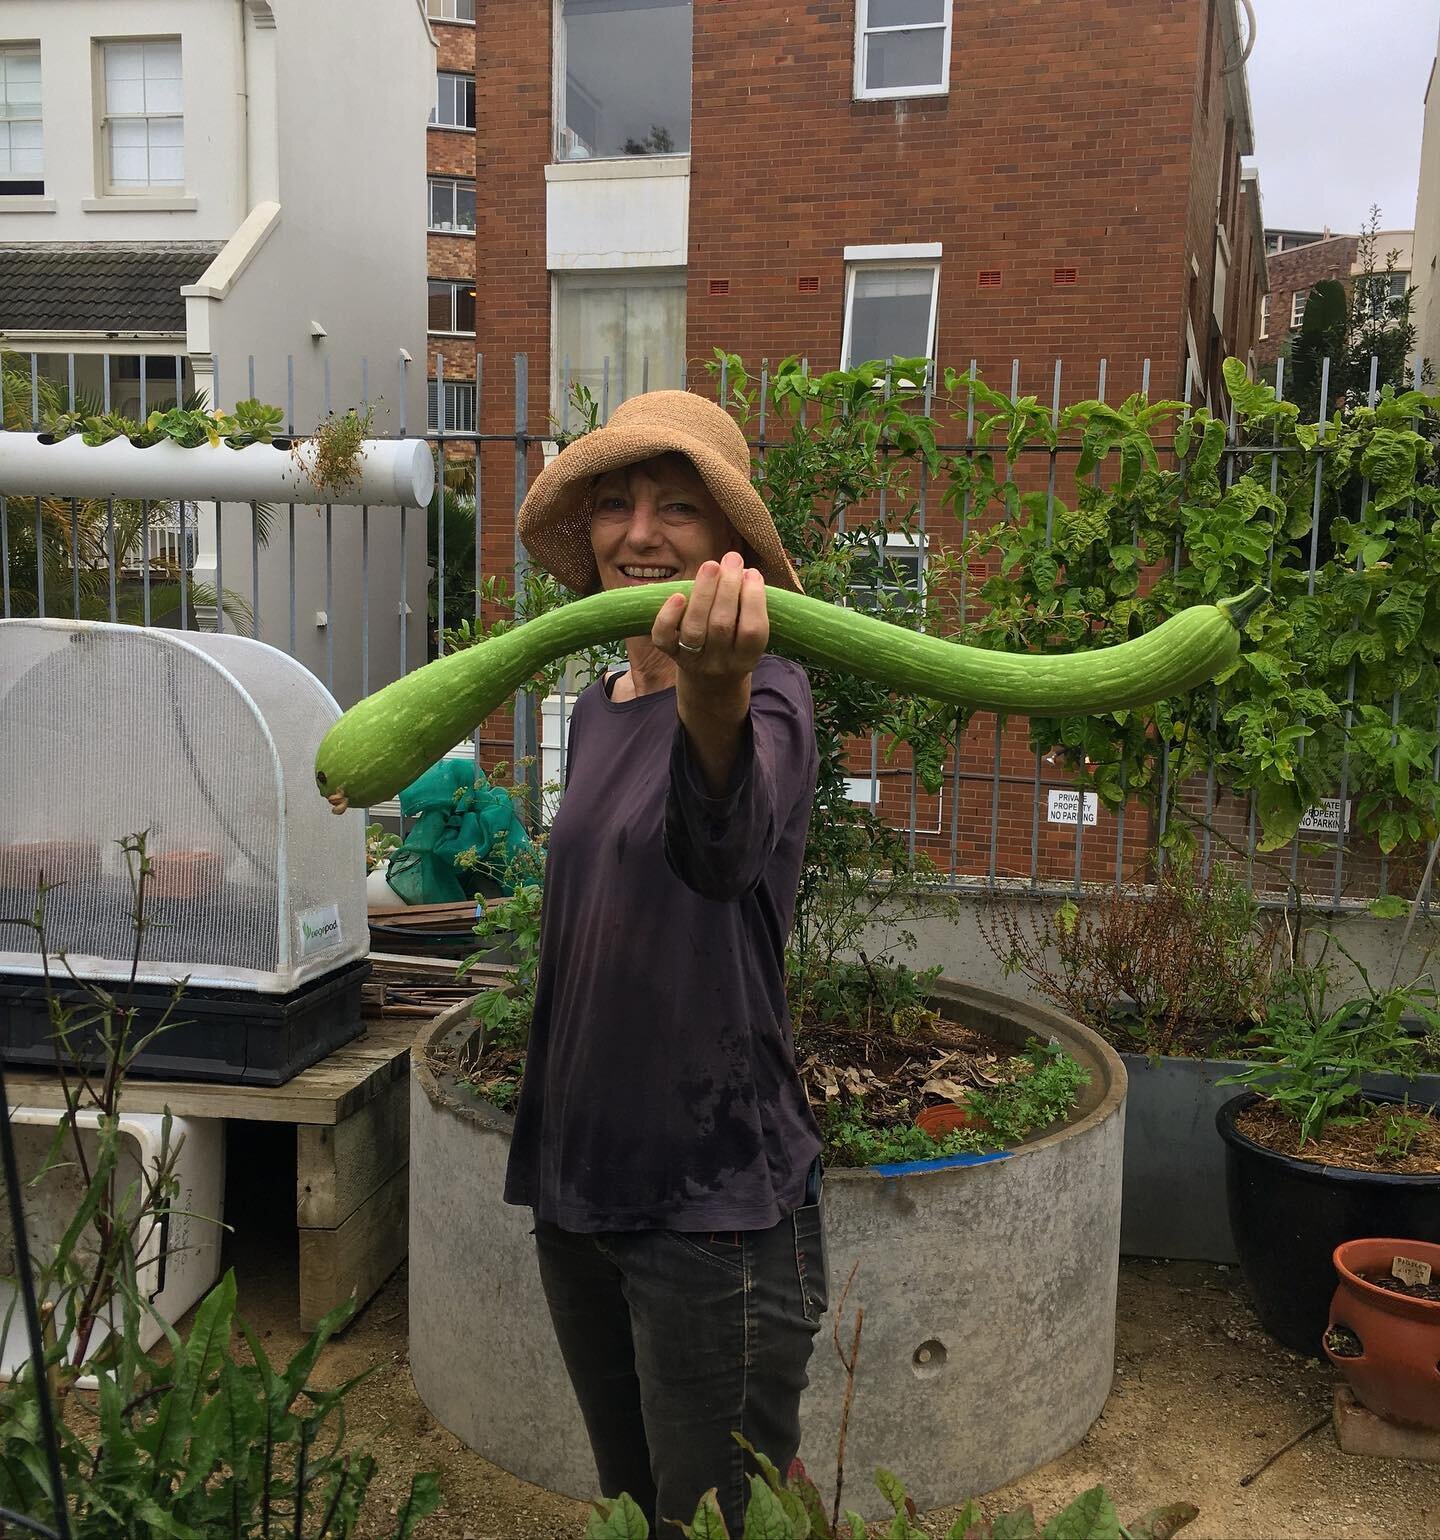 Helen finds herself a Tromboncino 

#tromboncinosquash #zucchini